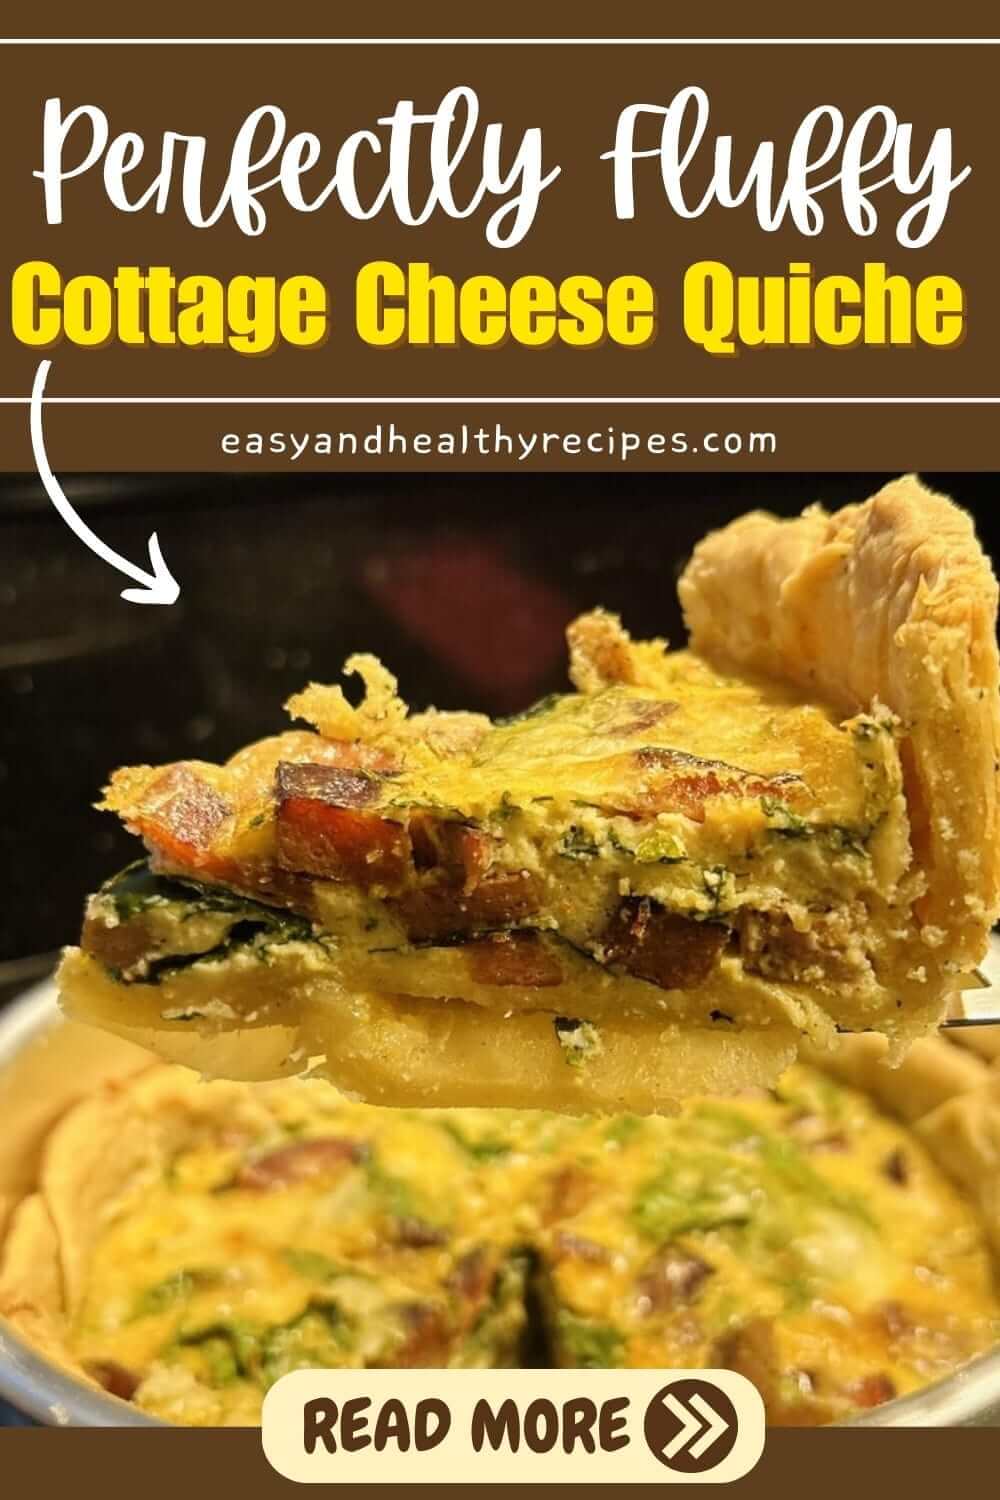 Cottage Cheese Quiche